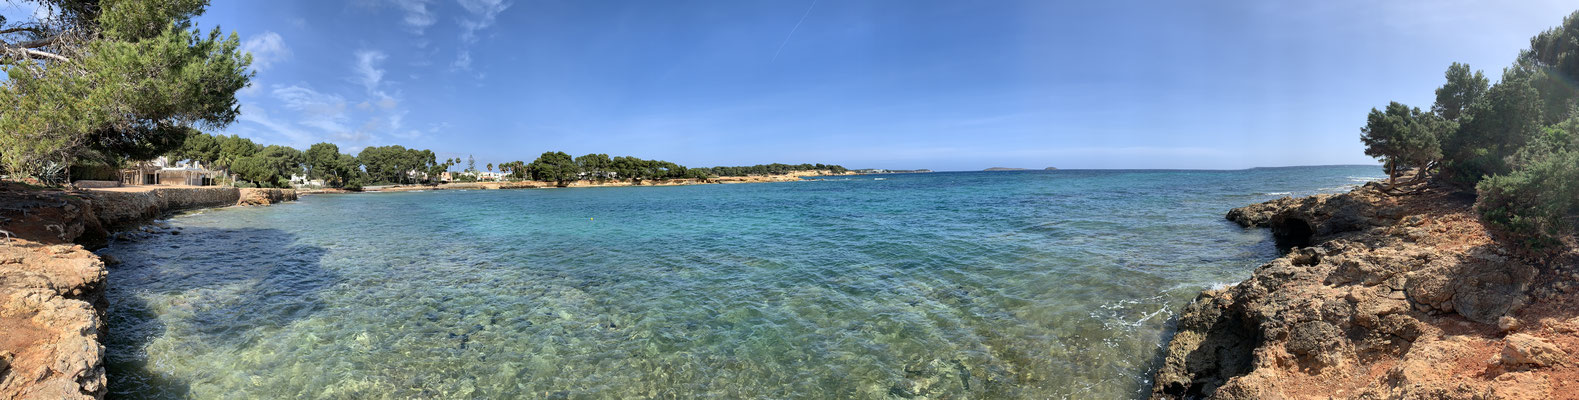 View of the sea, Babylon Beach, Ibiza